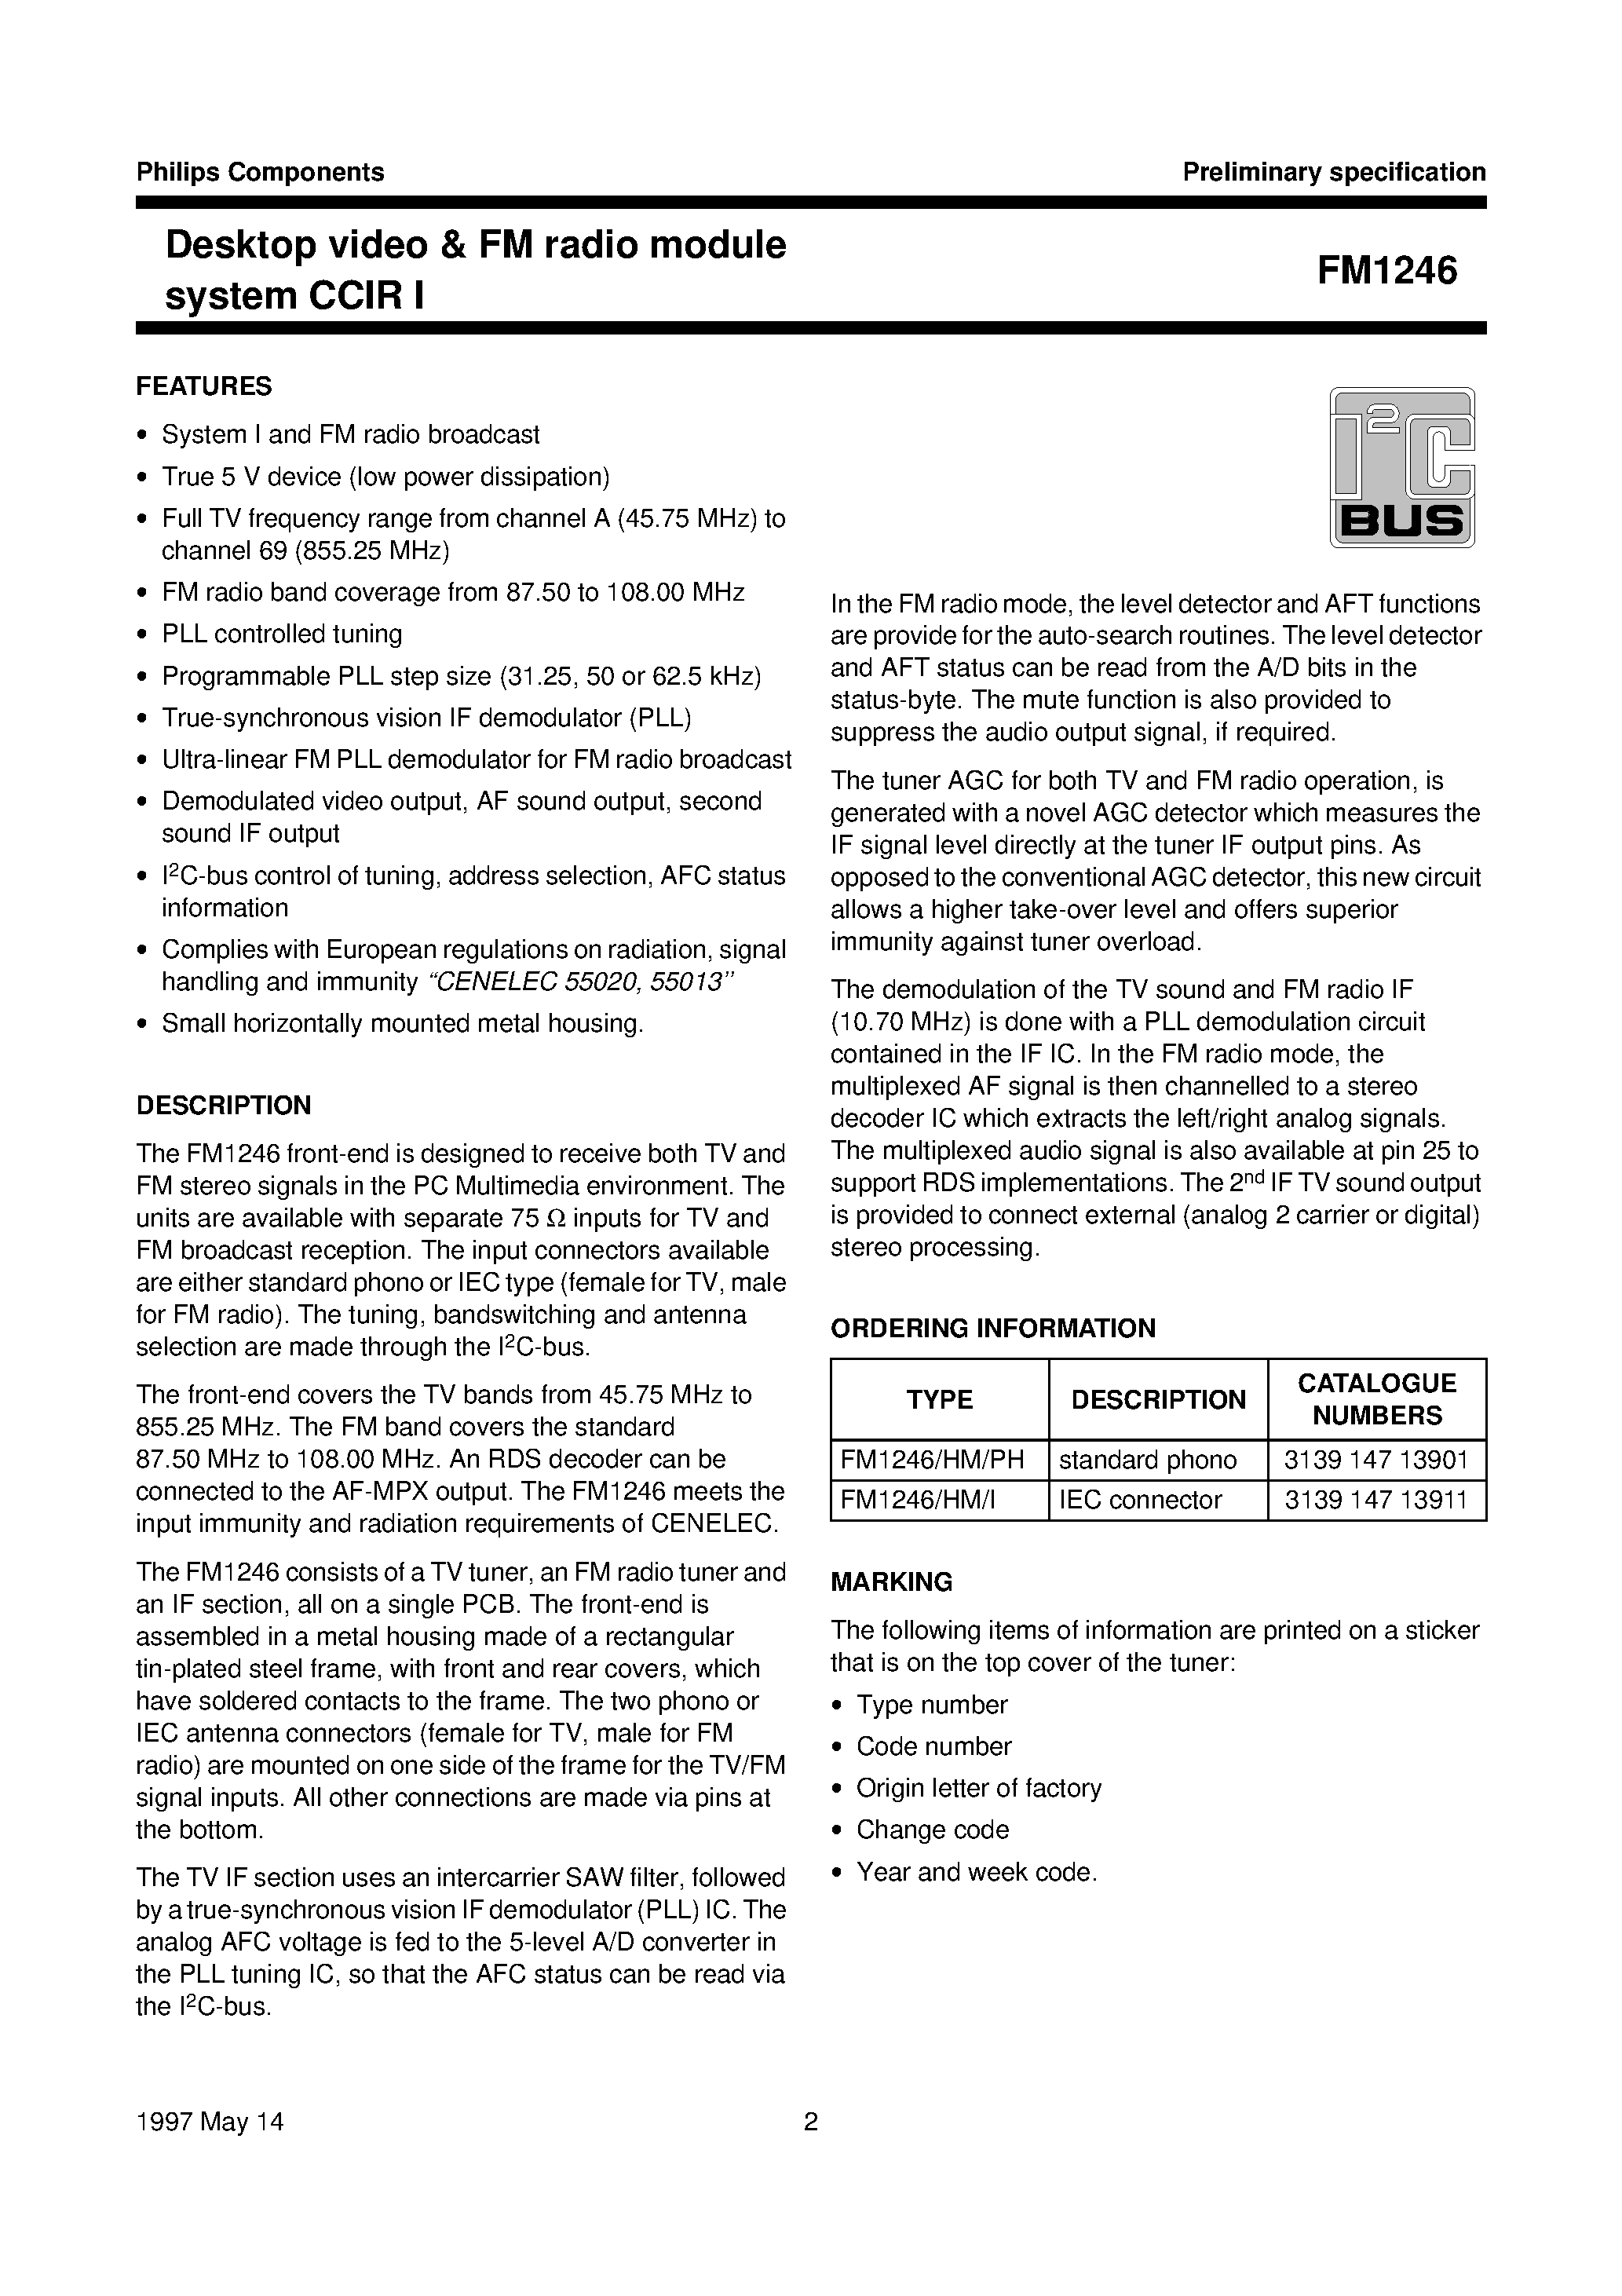 Datasheet FM1246 - Desktop video & FM radio module system CCIR I page 2